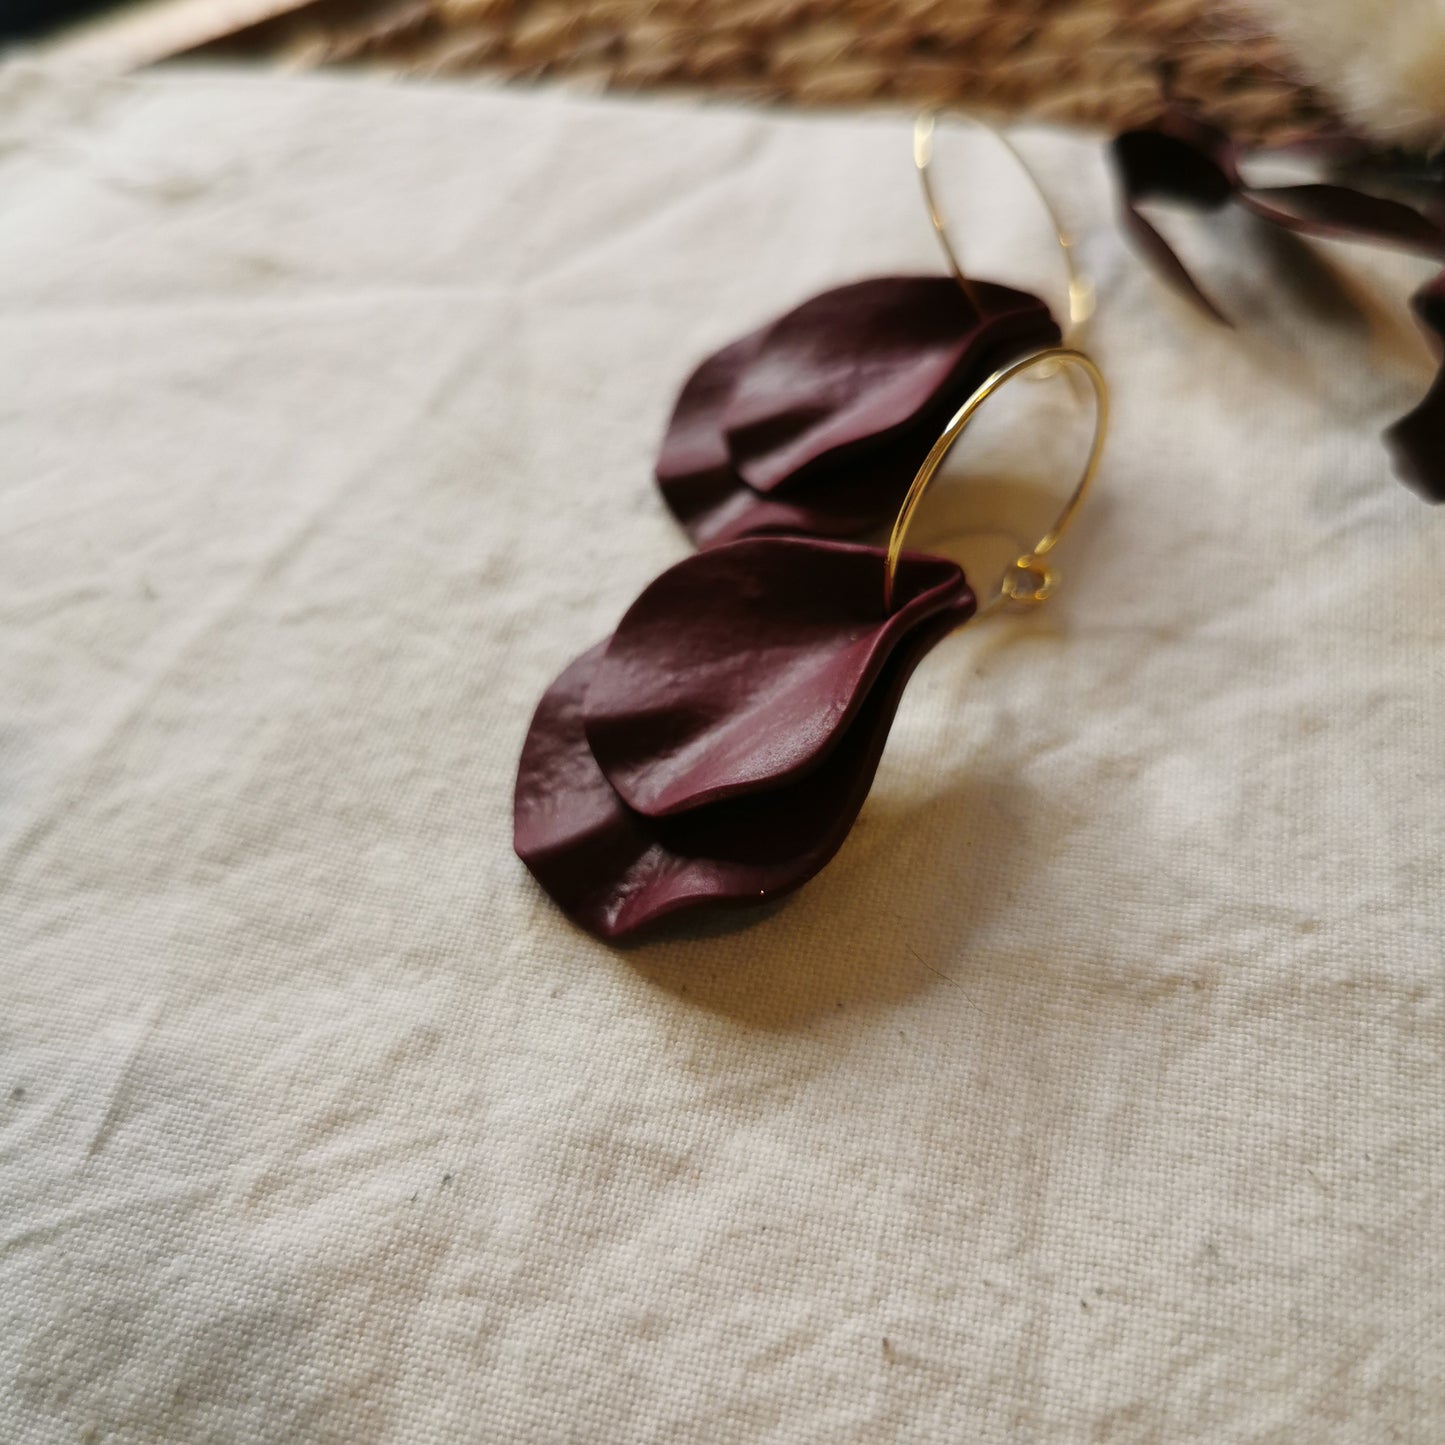 DELEN DOUBLE | medium rose petal 20mm hoop earrings in deep merlot red